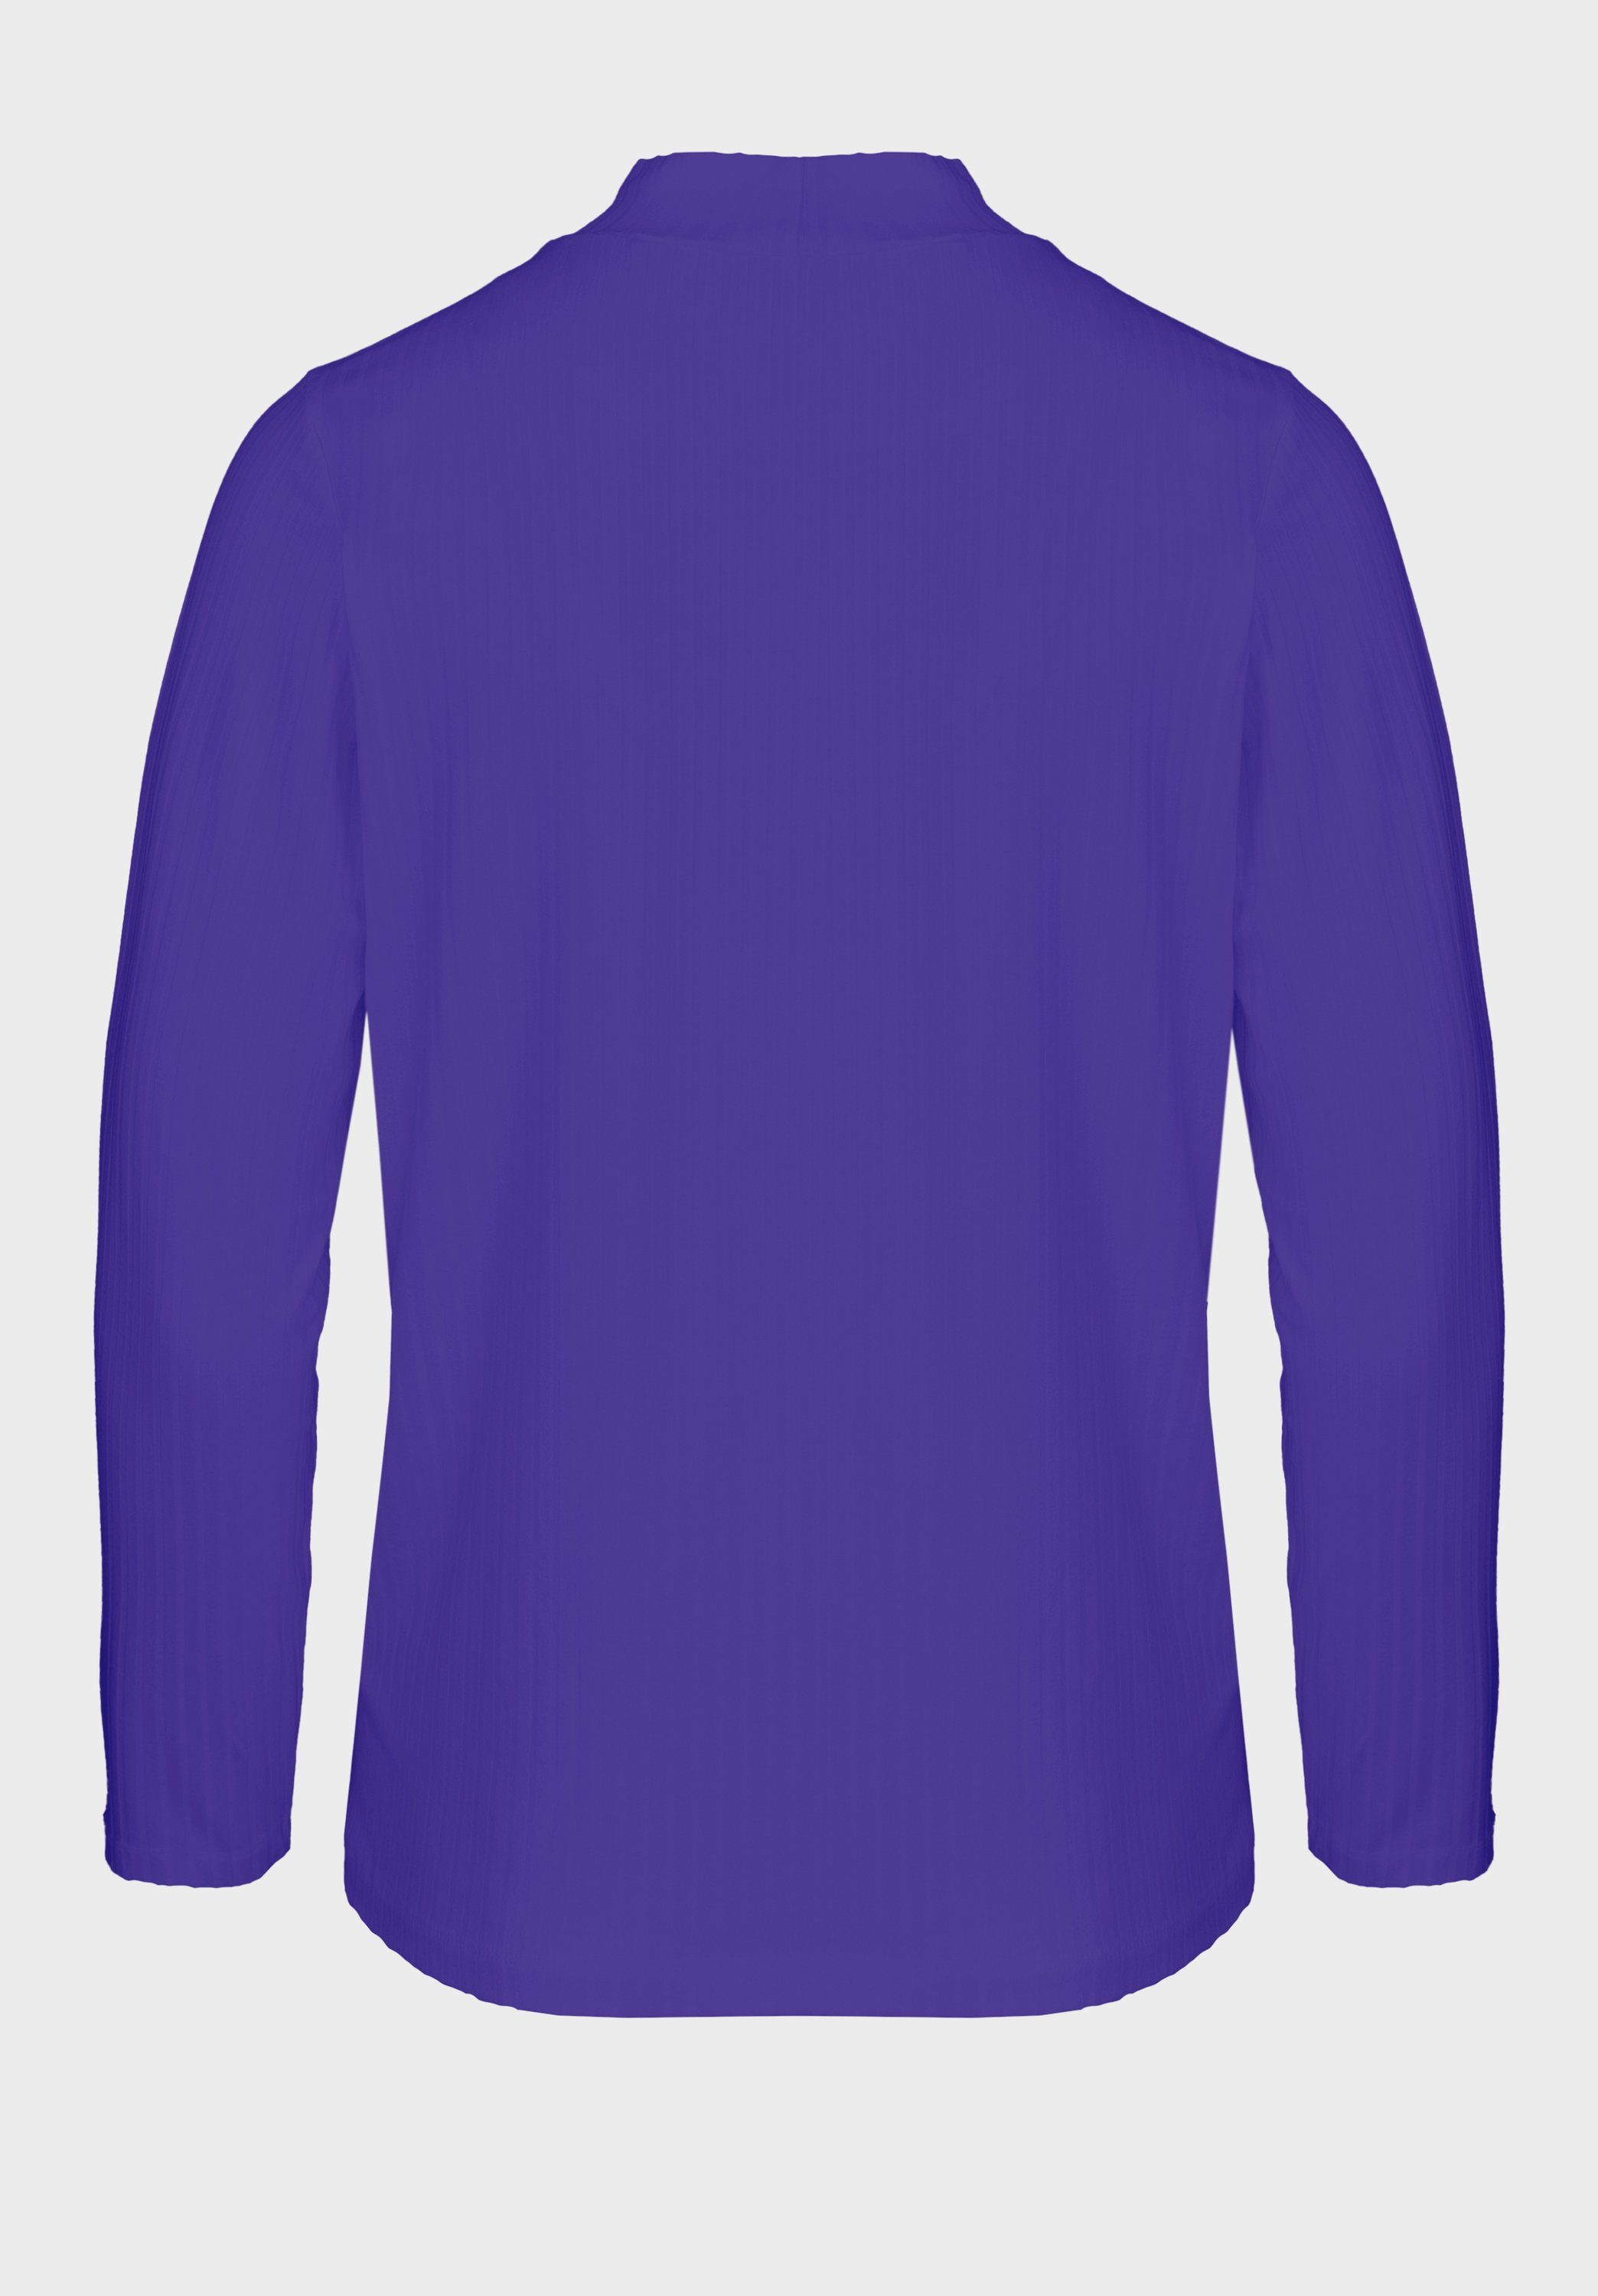 coolen Trendfarben Langarmshirt Turtle-Neck bianca purple GRETA modernem in mit